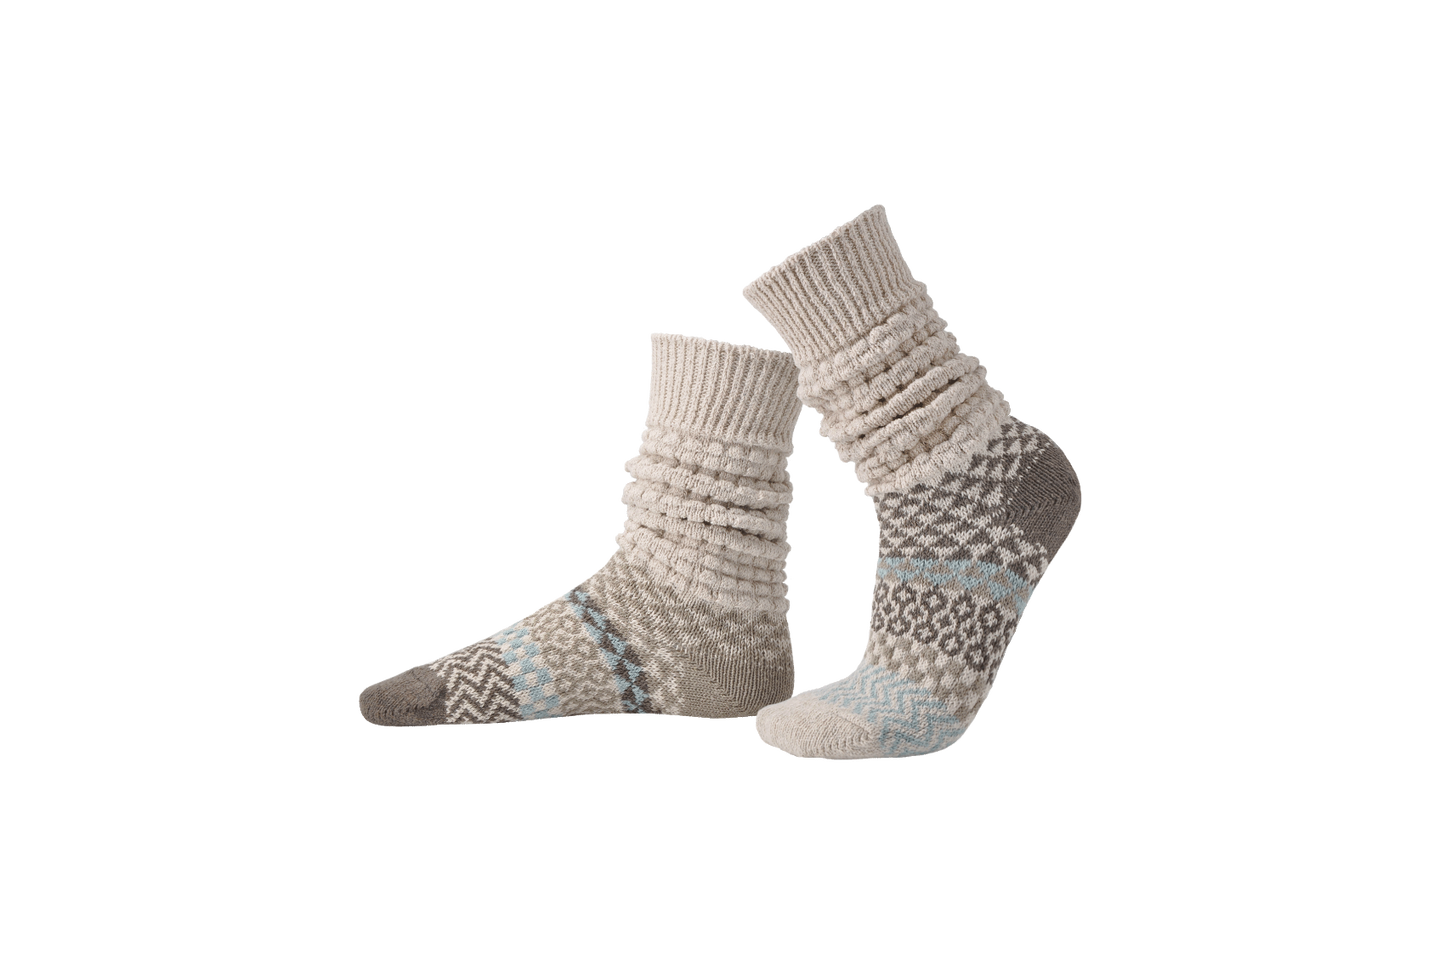 Fusion Slouch Socks - Seashell